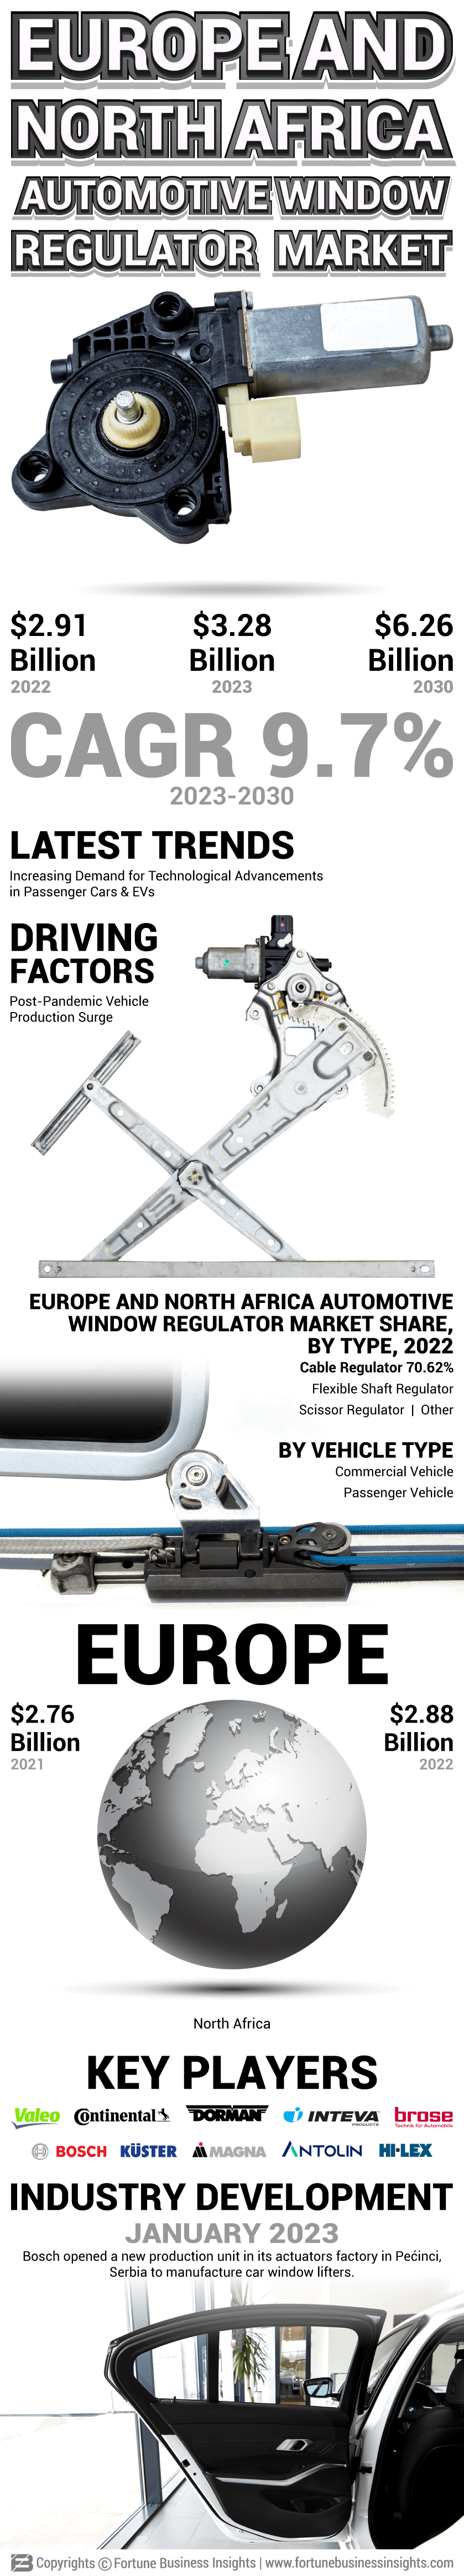 Europe and North Africa Automotive Window Regulator Market